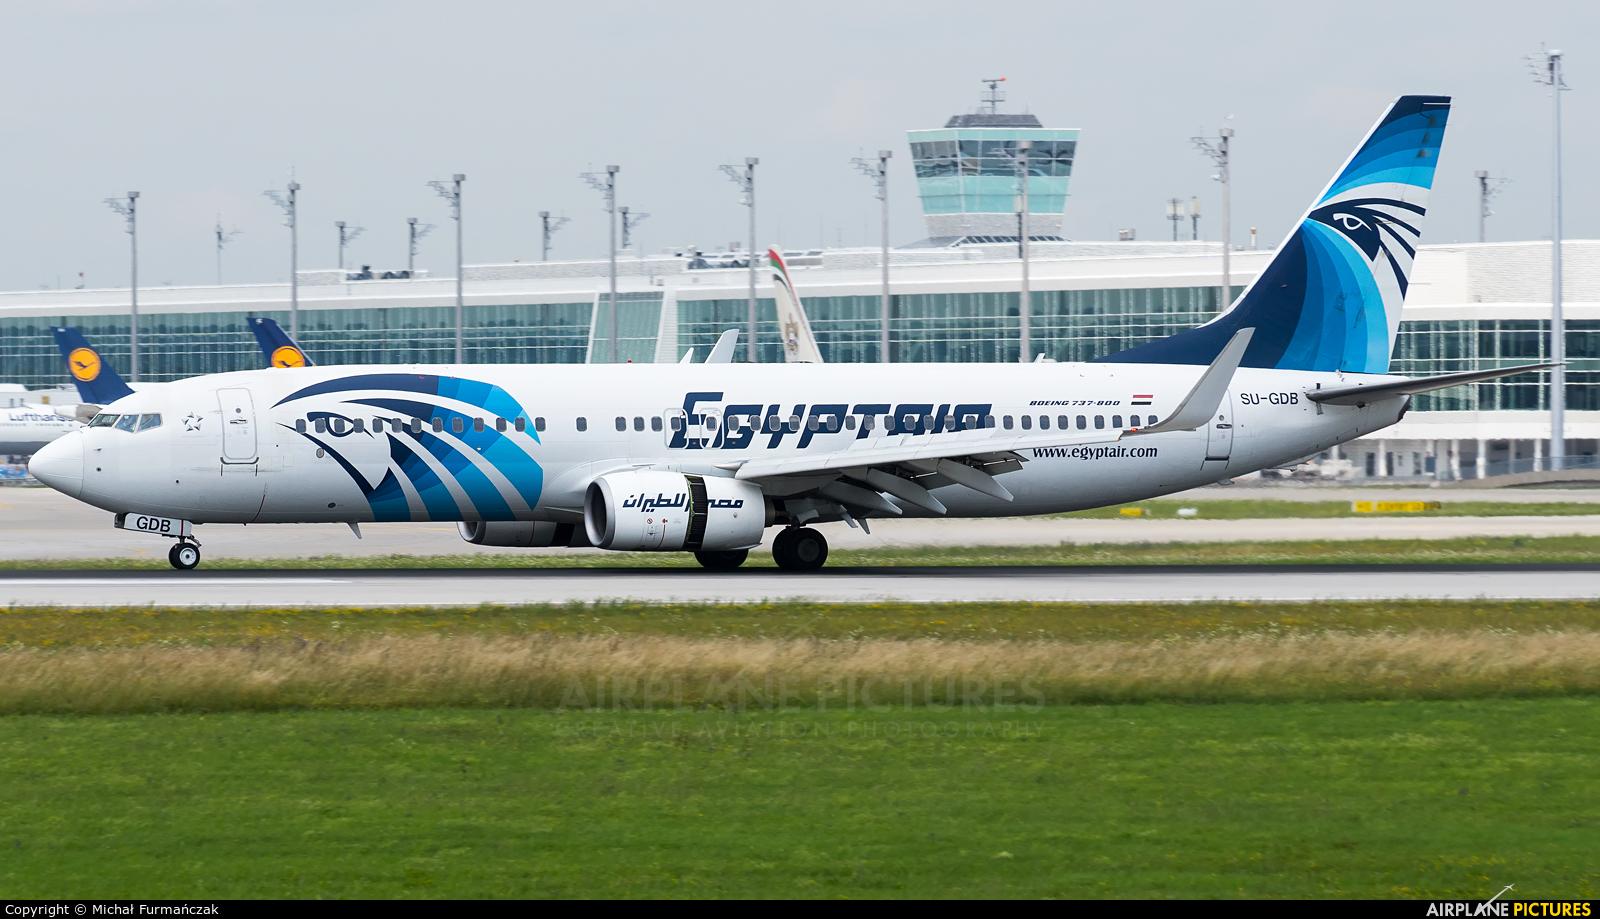 Egyptair SU-GDB aircraft at Munich